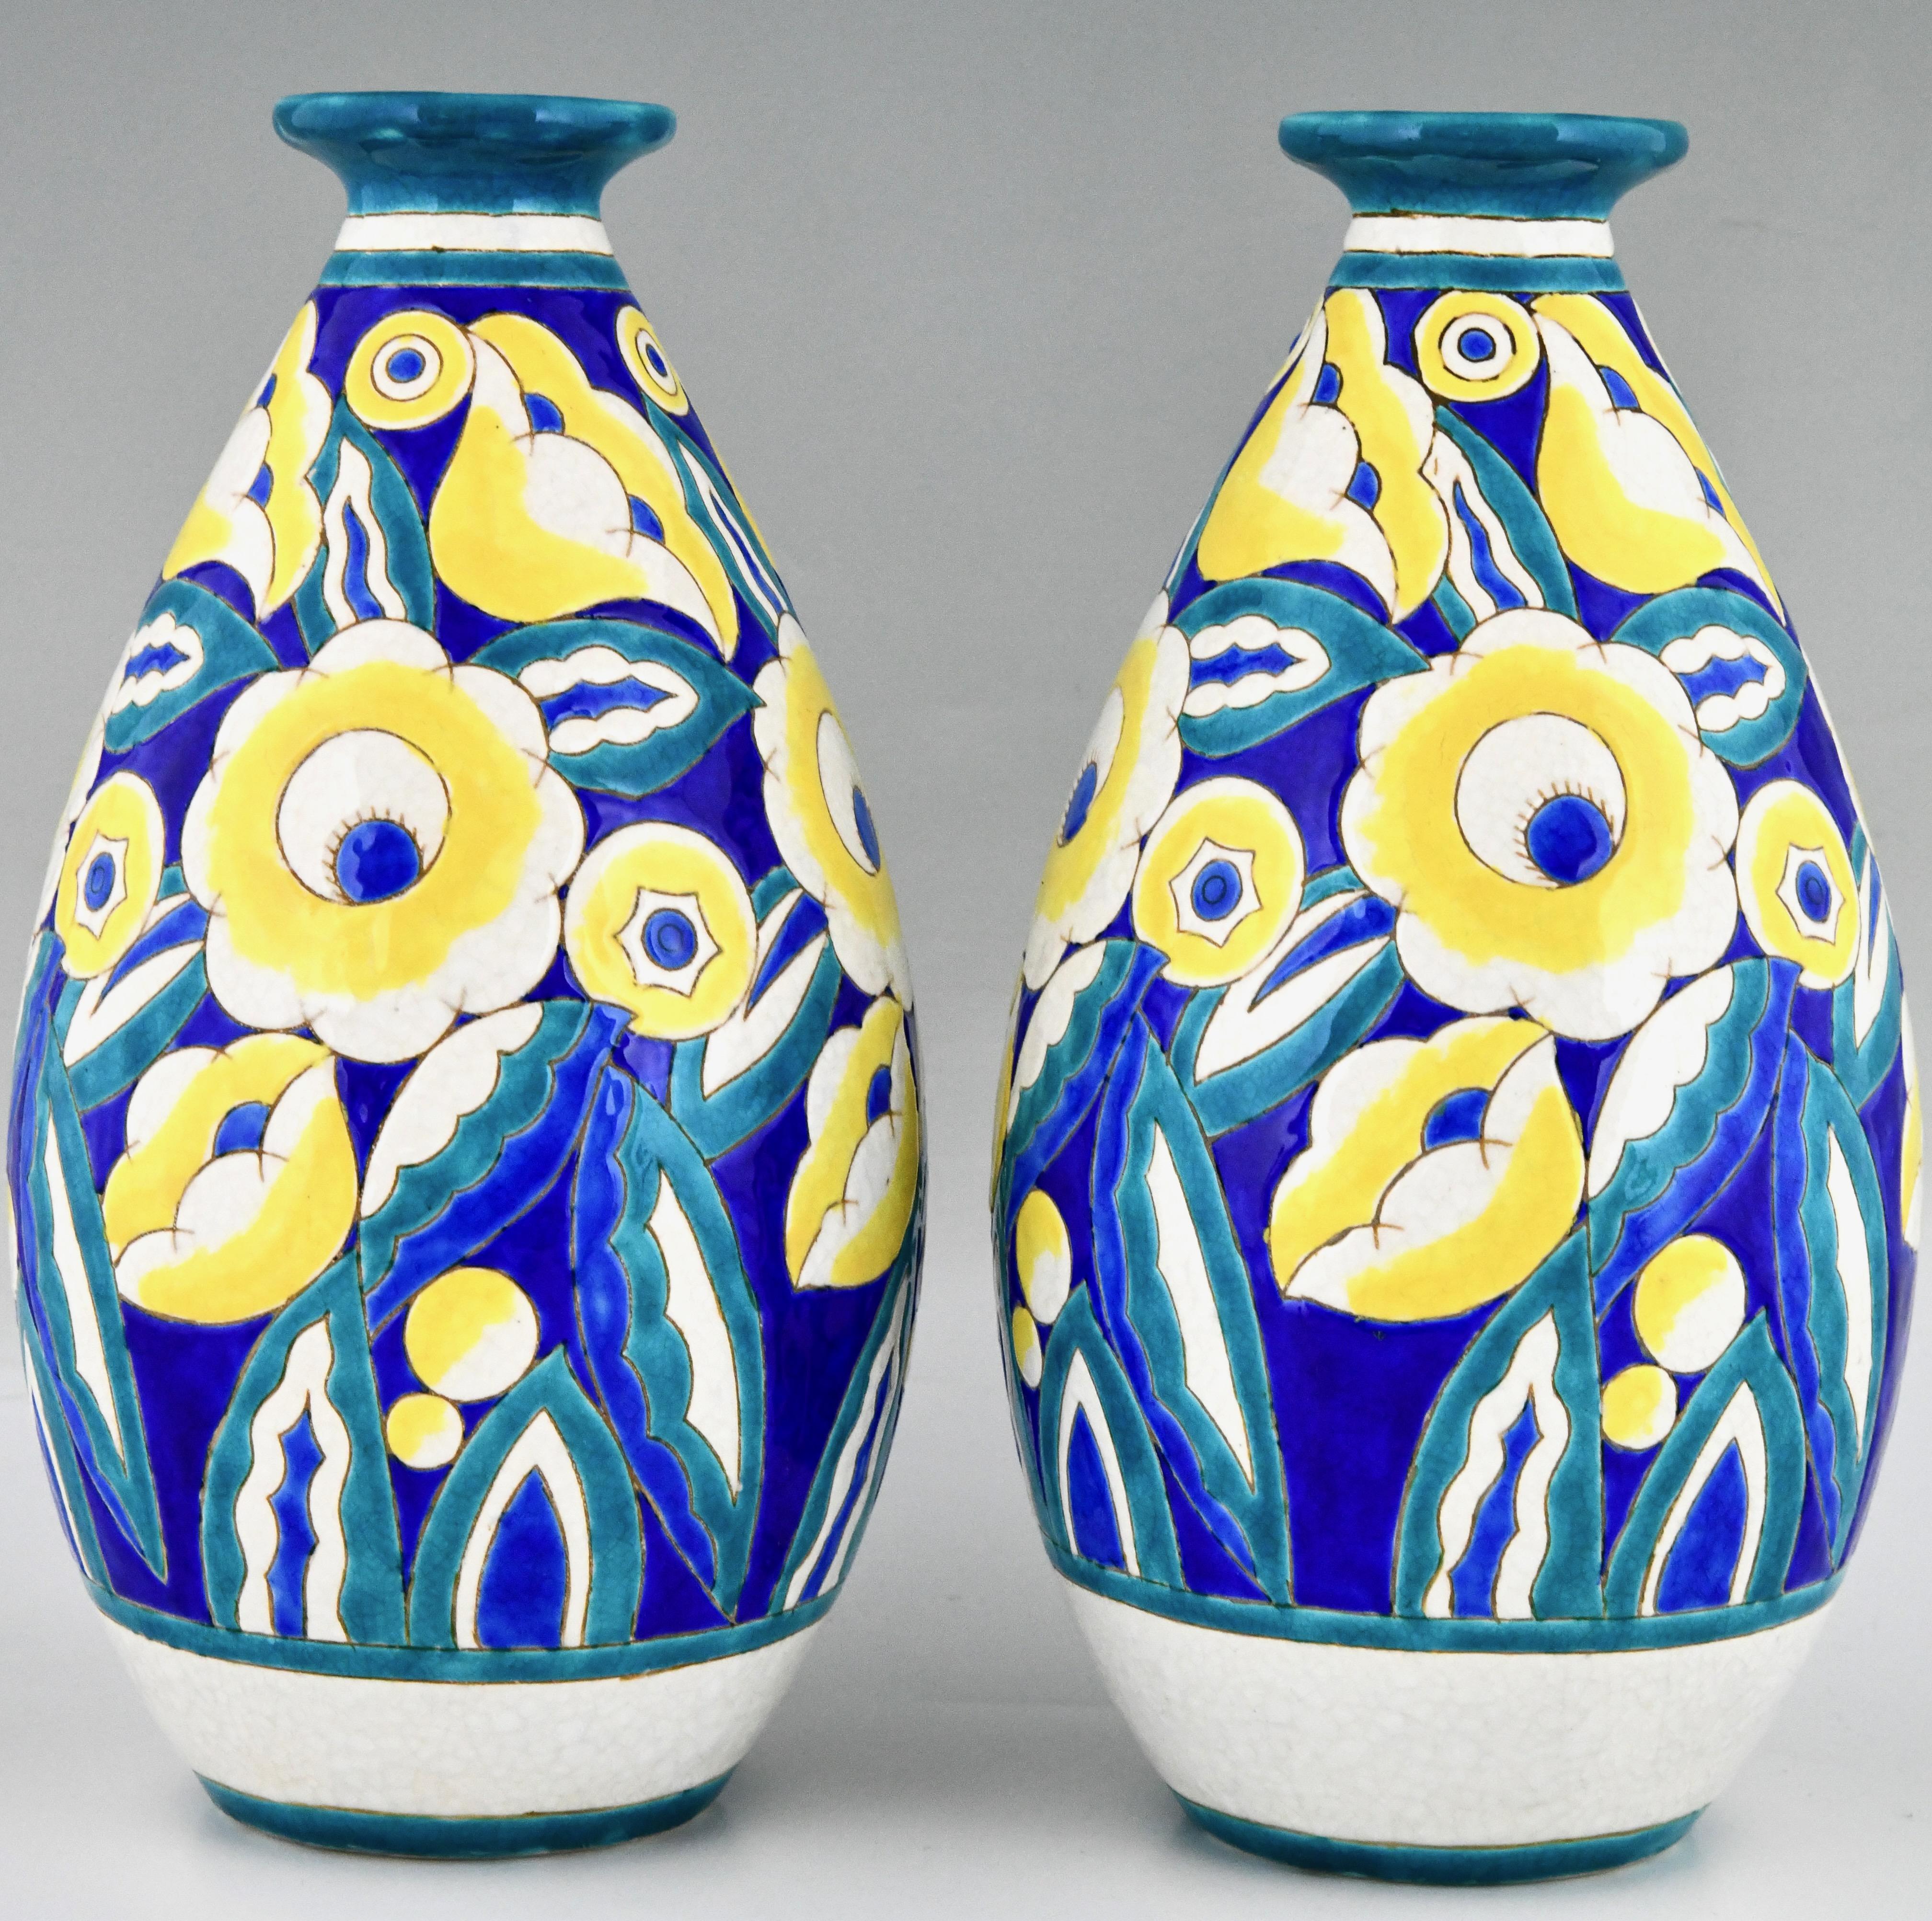 Belgian Pair of Art Deco Ceramic Vases with Flowers by Keramis, Belgium 1932